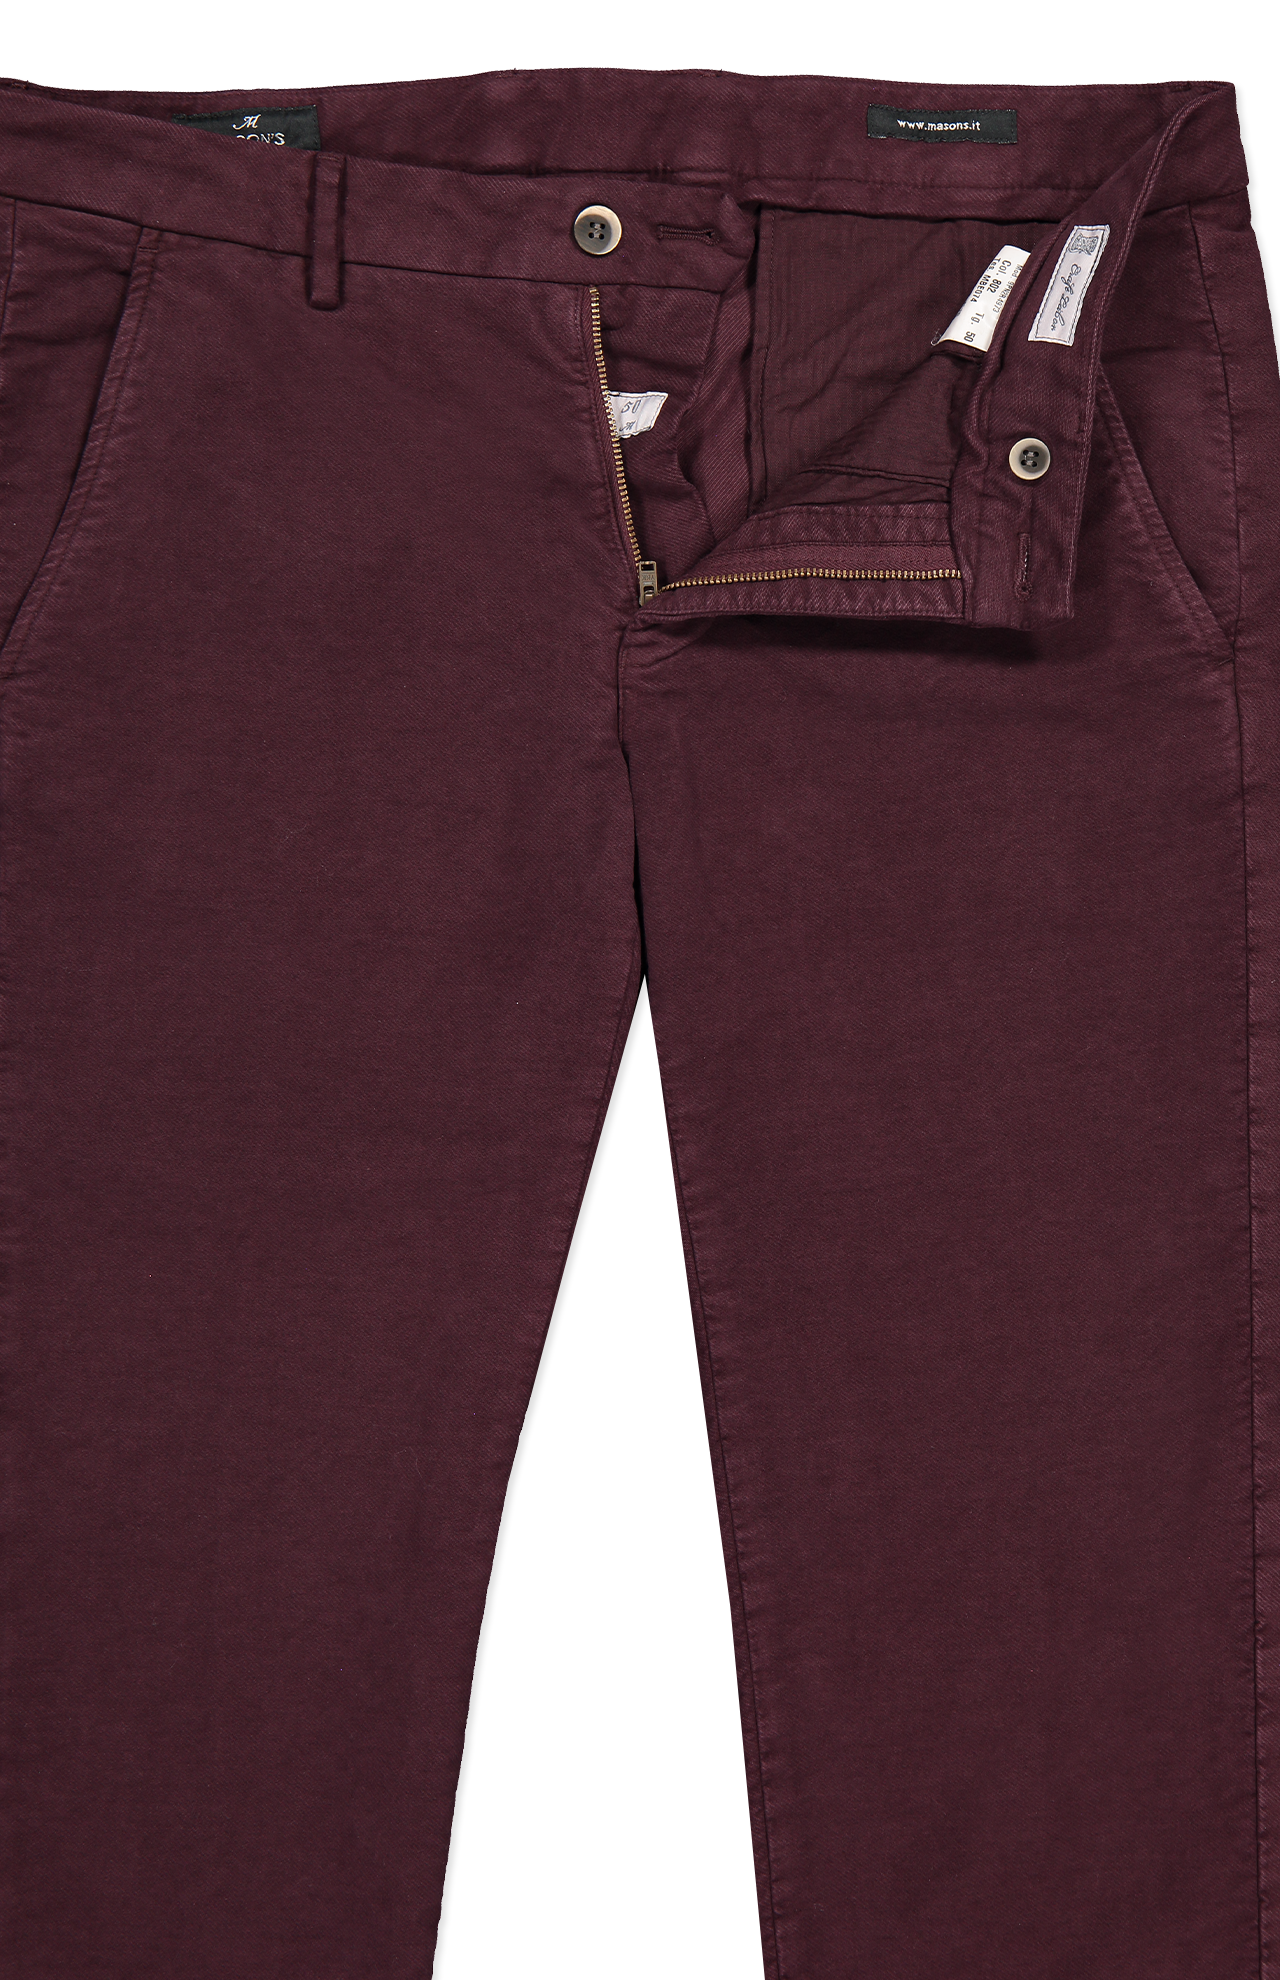 Mason's Torino Style Moleskin Chino Pant in Plum Zip Fly Detail Image (6955219976307)